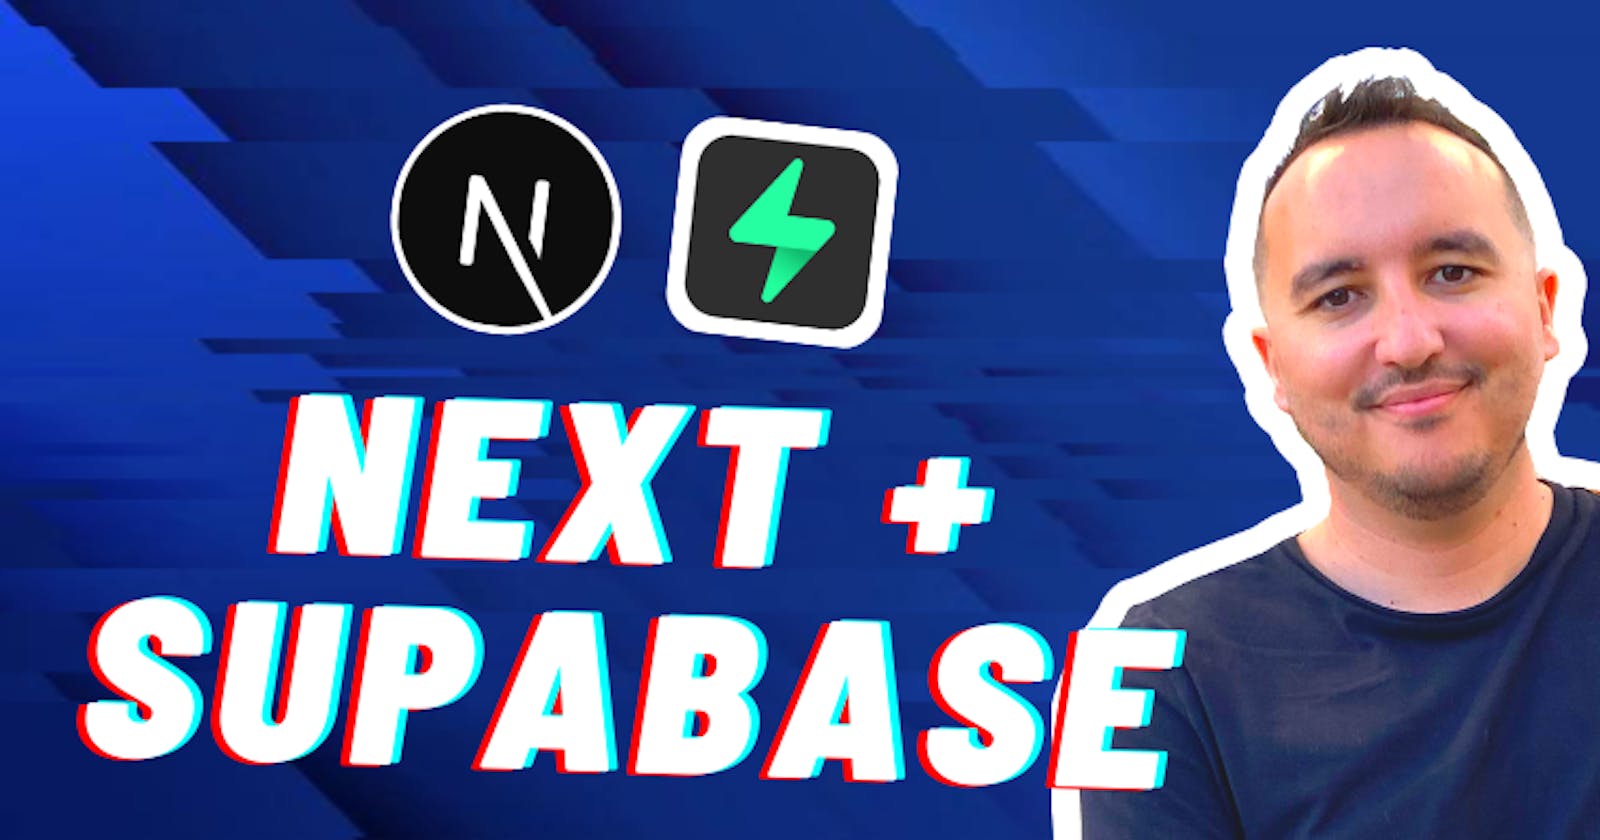 Next + Supabase in 16 minutes!